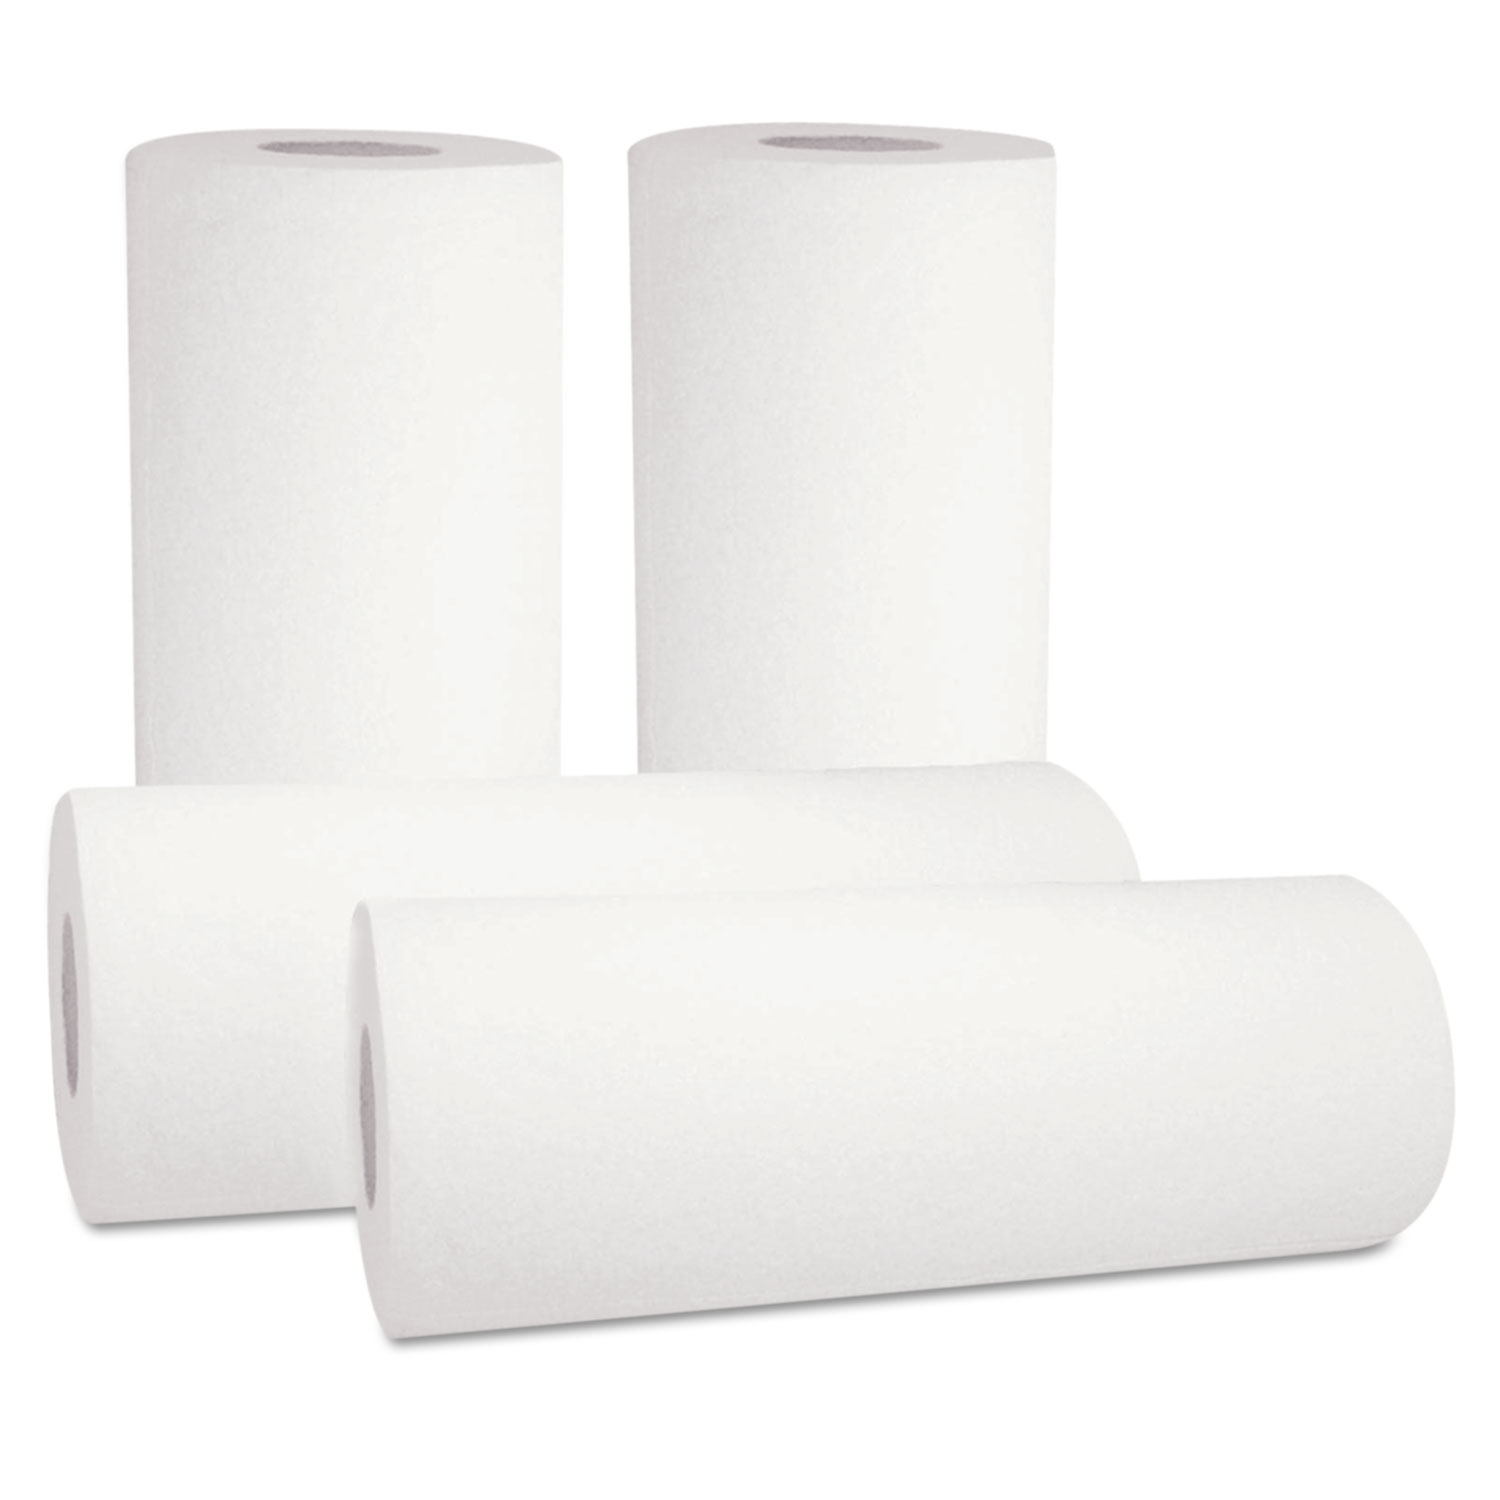 Tuff-Job Double Recrepe Wipers, 9 3/8 x 11, White, 72 Roll, 20 Rolls/Carton